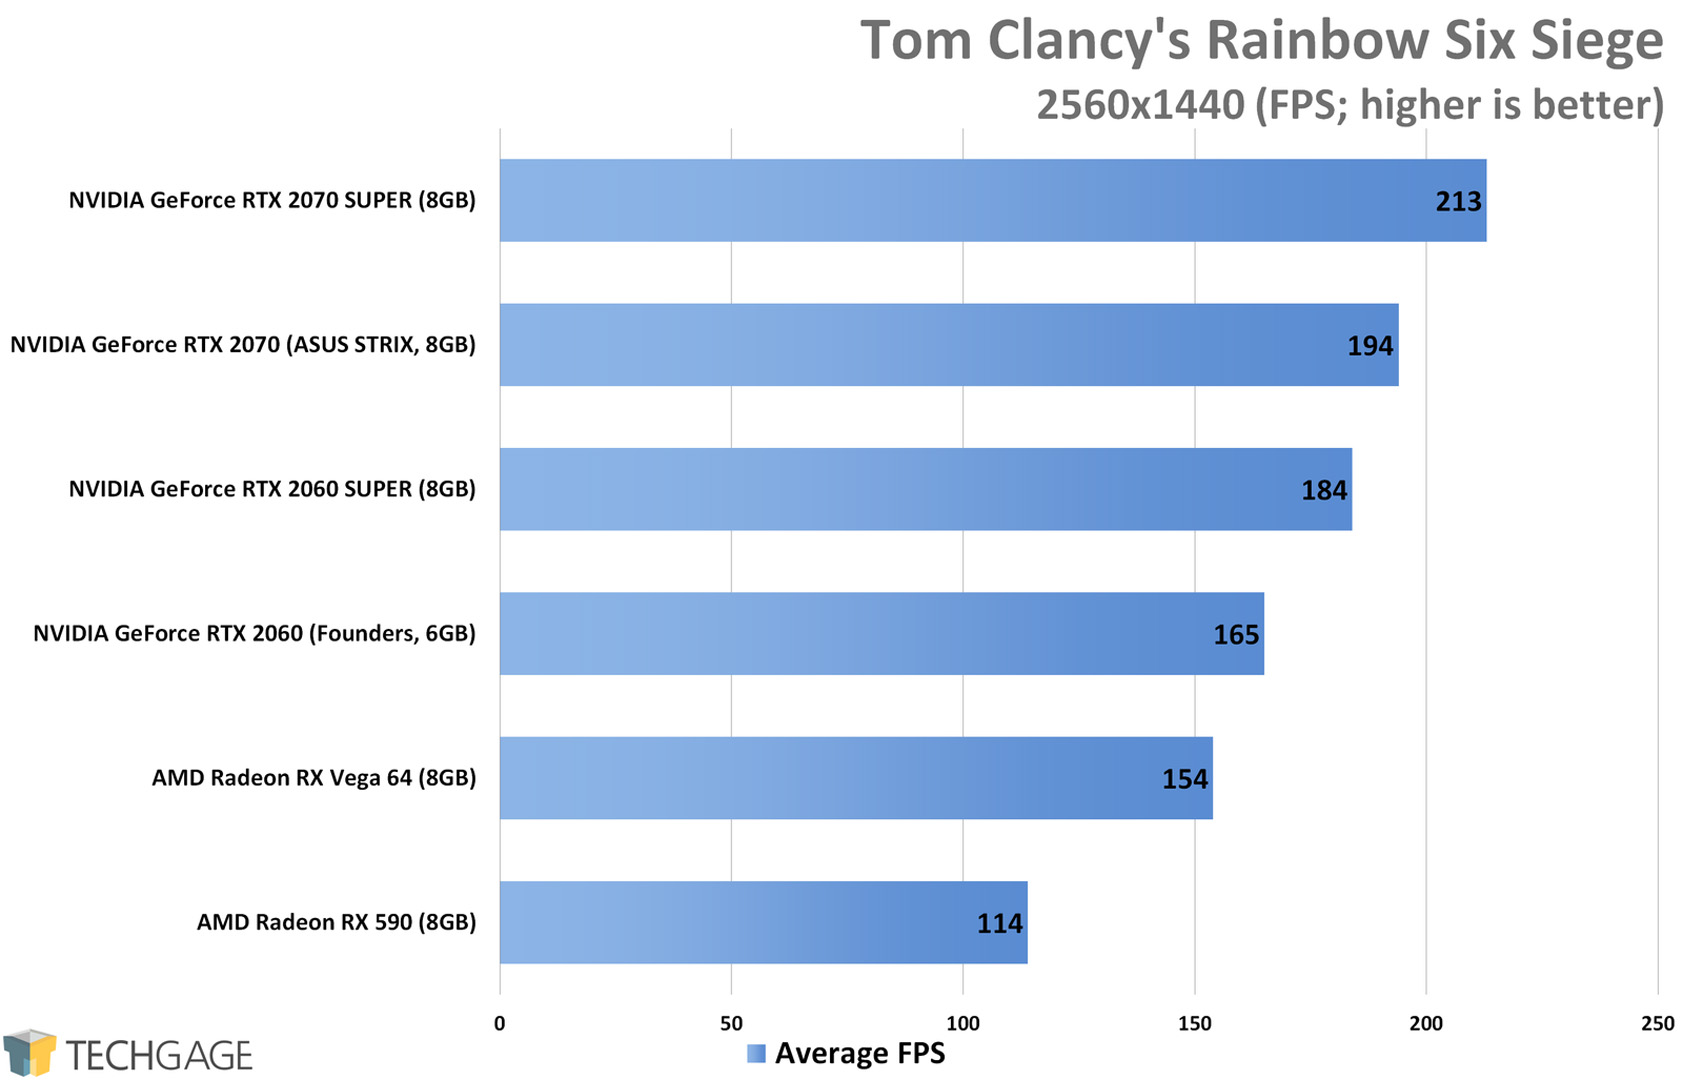 Tom Clancy's Rainbow Six Siege (1440p) - NVIDIA RTX SUPER 2060 and 2070 Performance